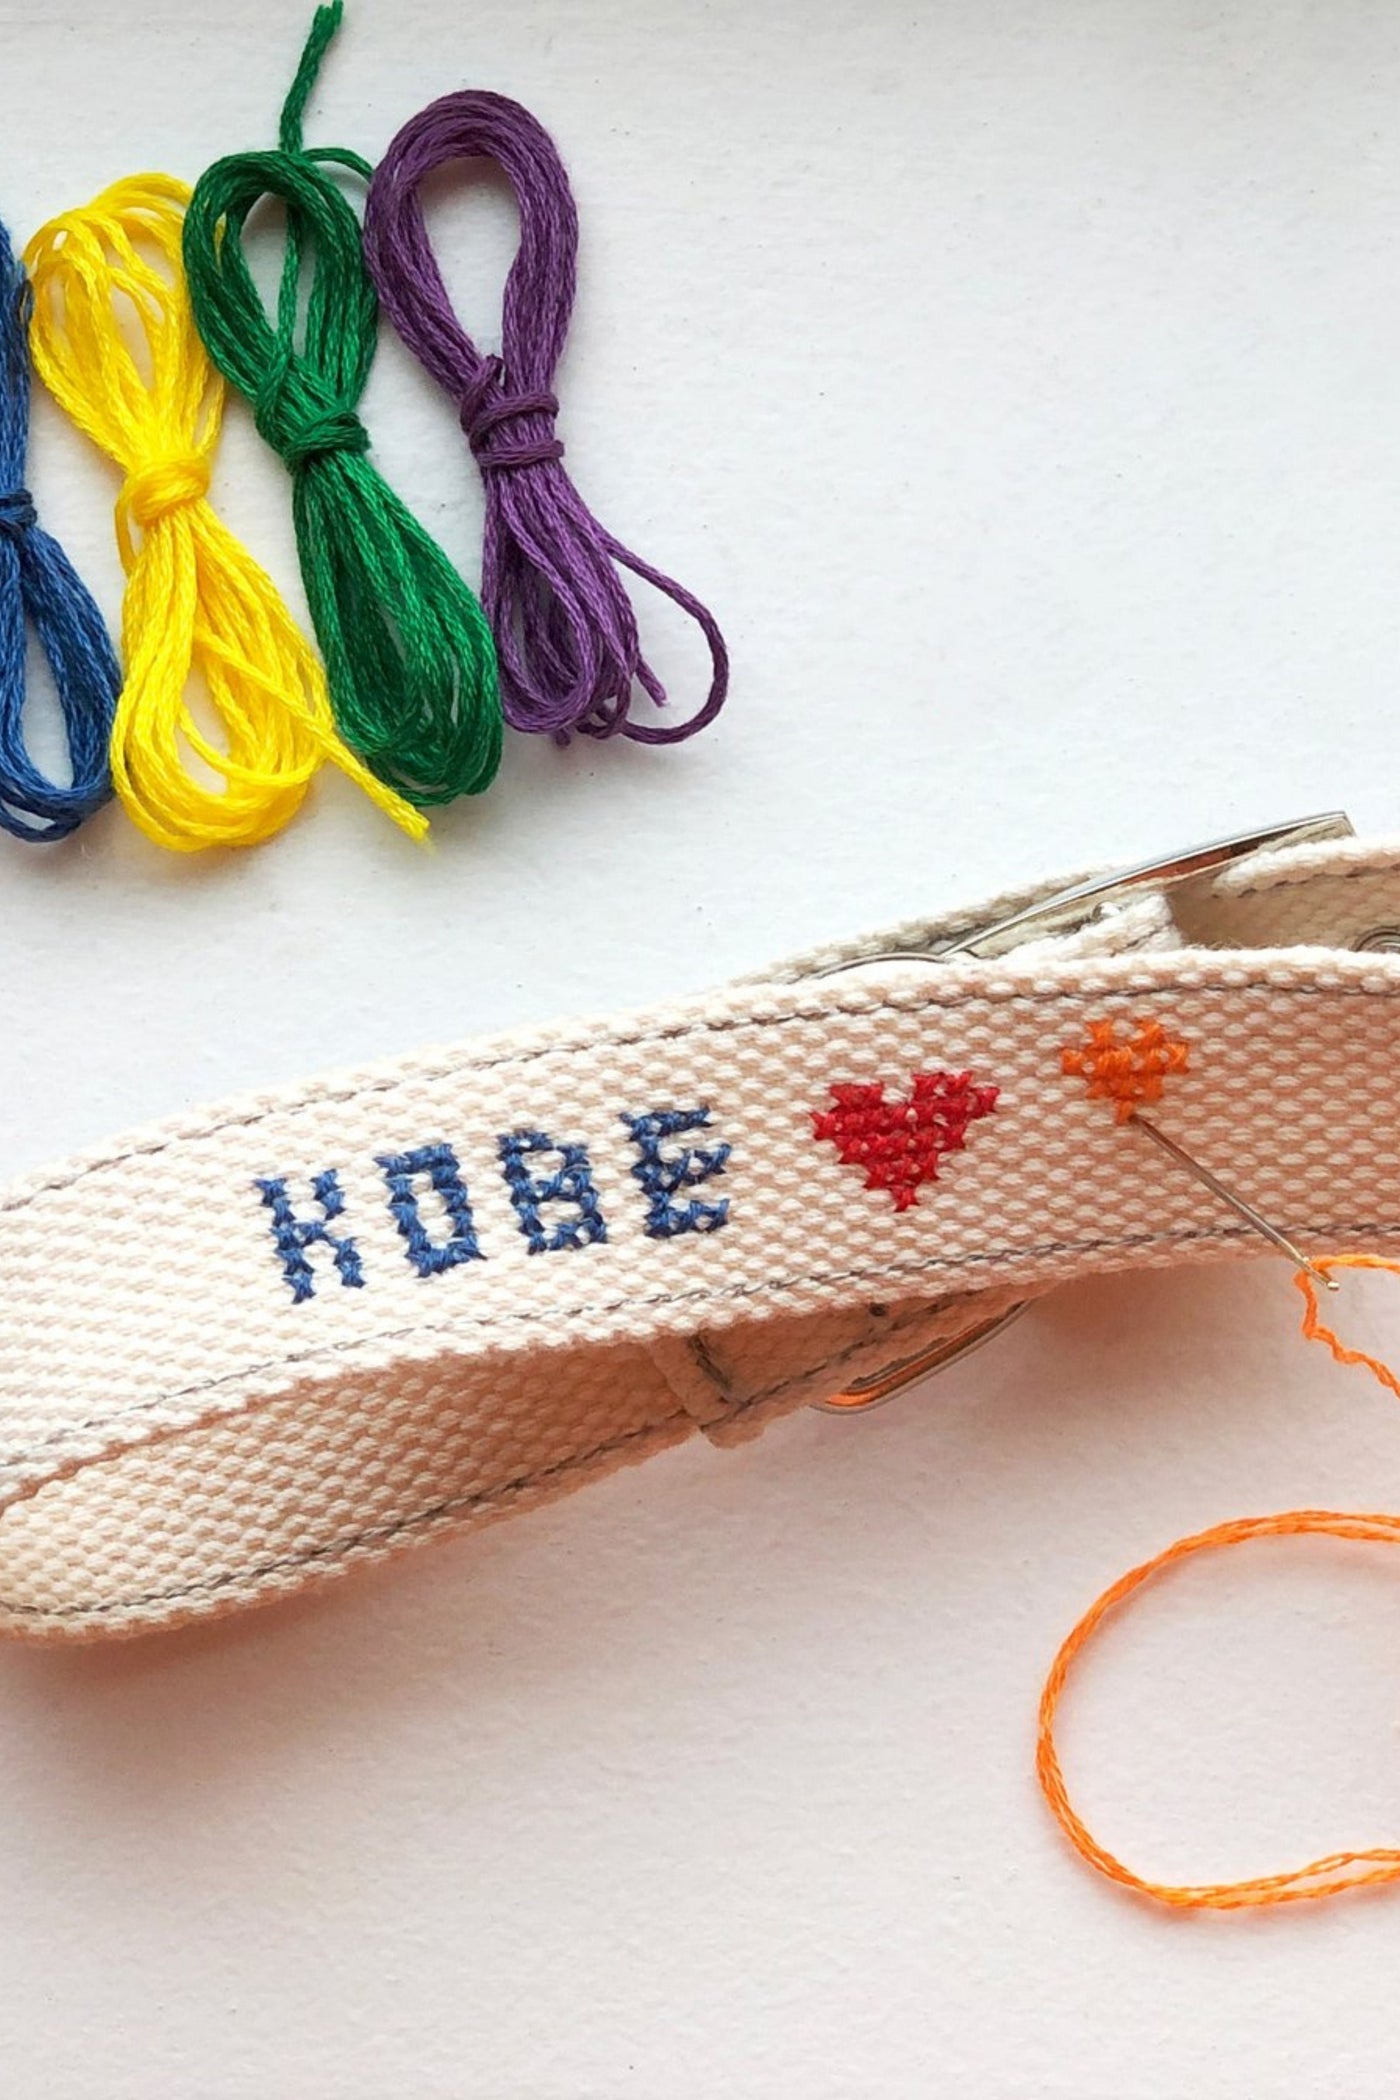 Kikkerland DIY Cross Stitch Dog Collar-Homeware-Ohh! By Gum - Shop Sustainable